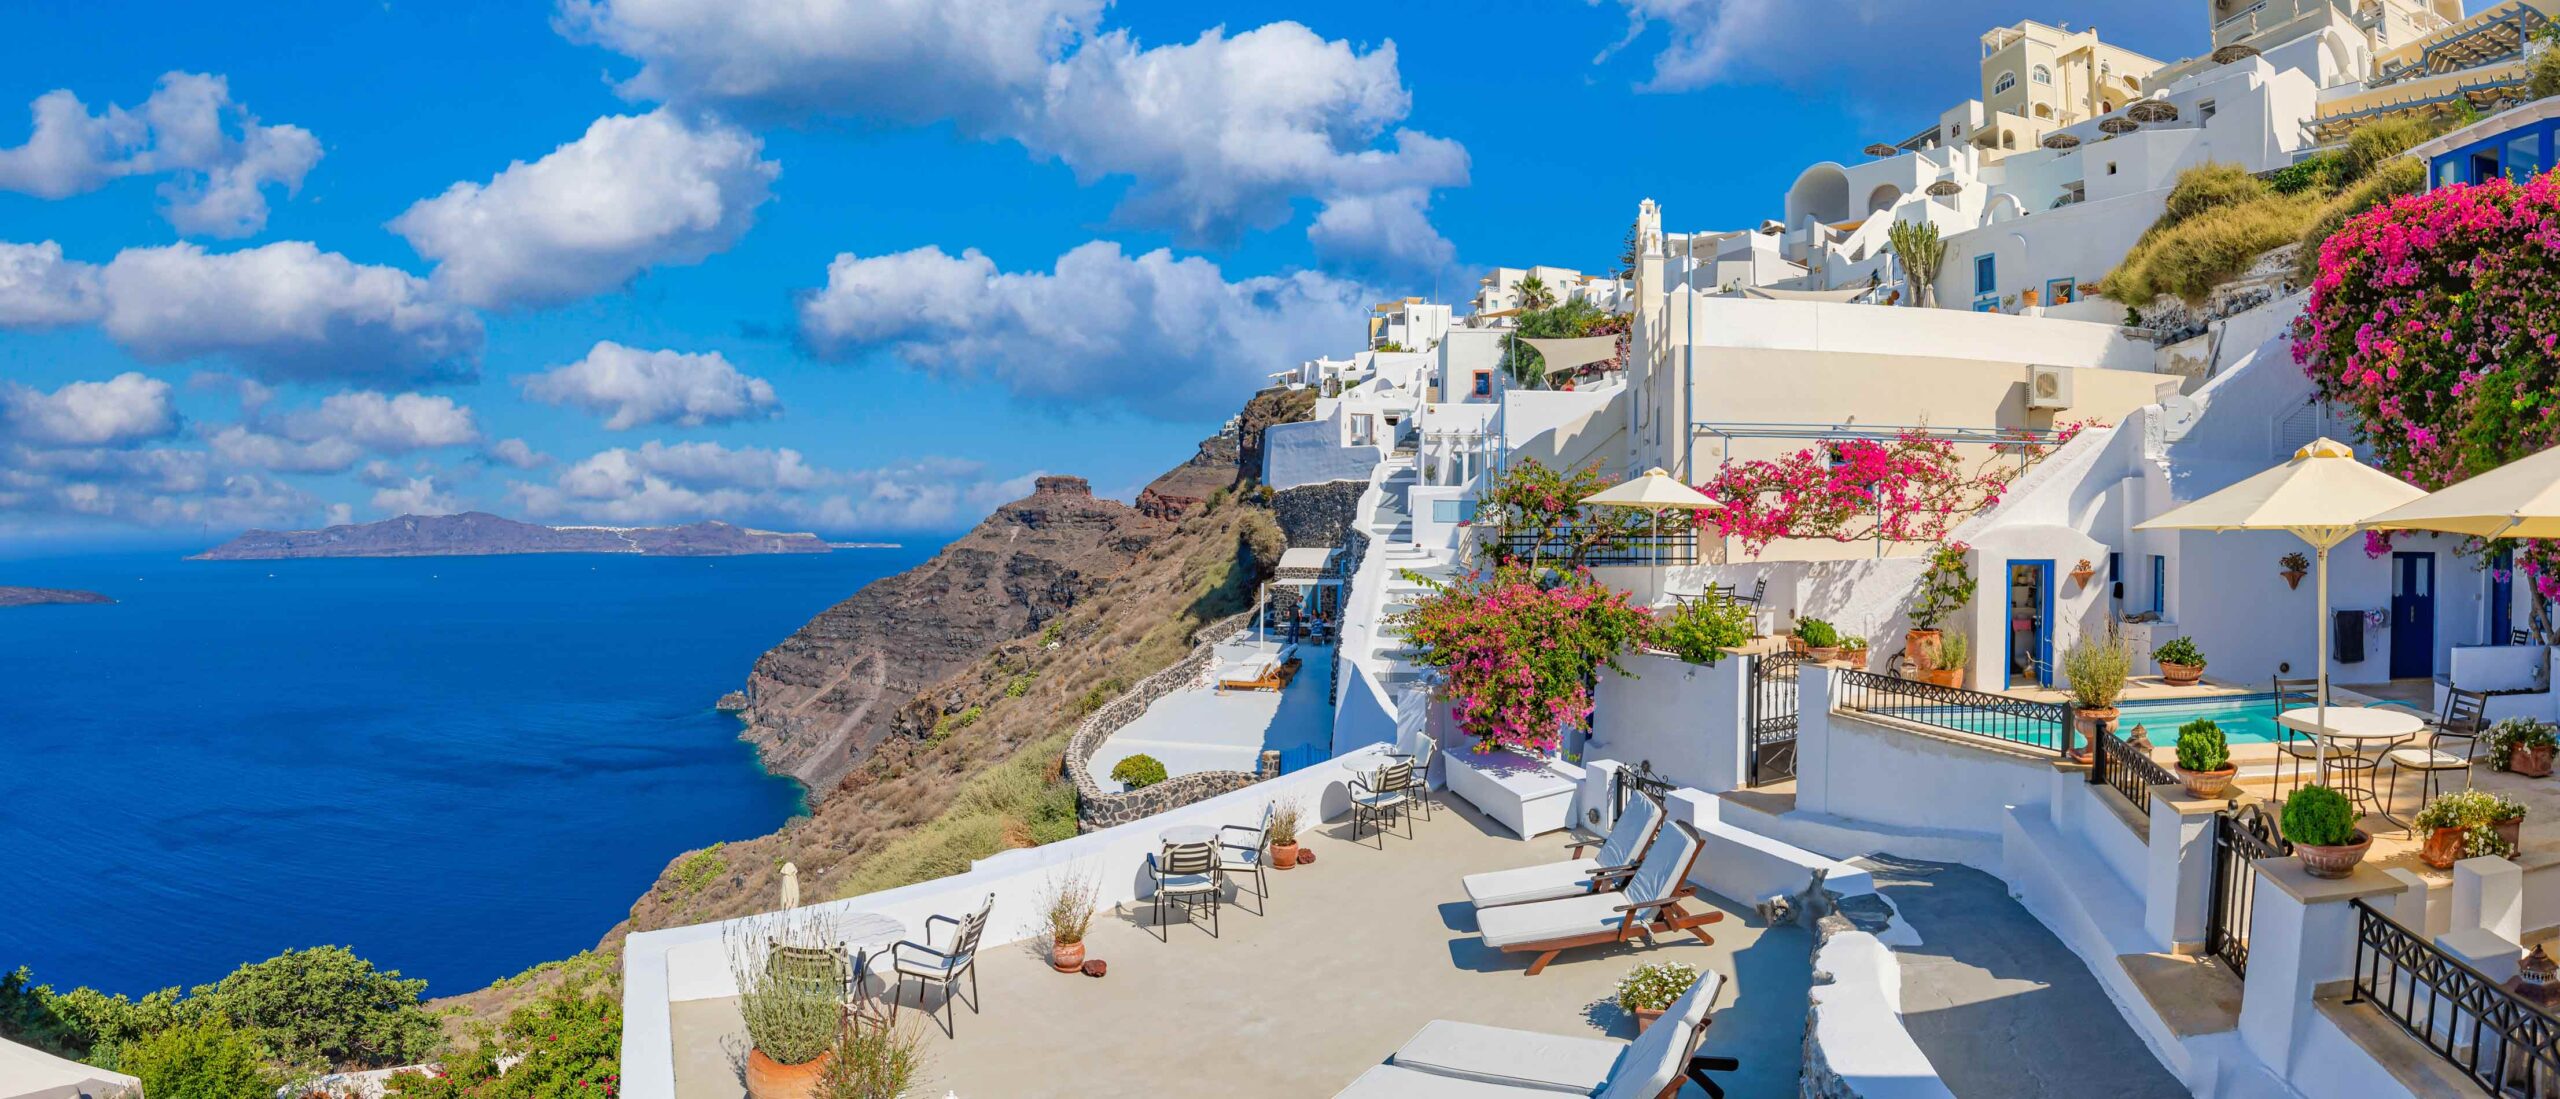 The Best Hotels in Santorini